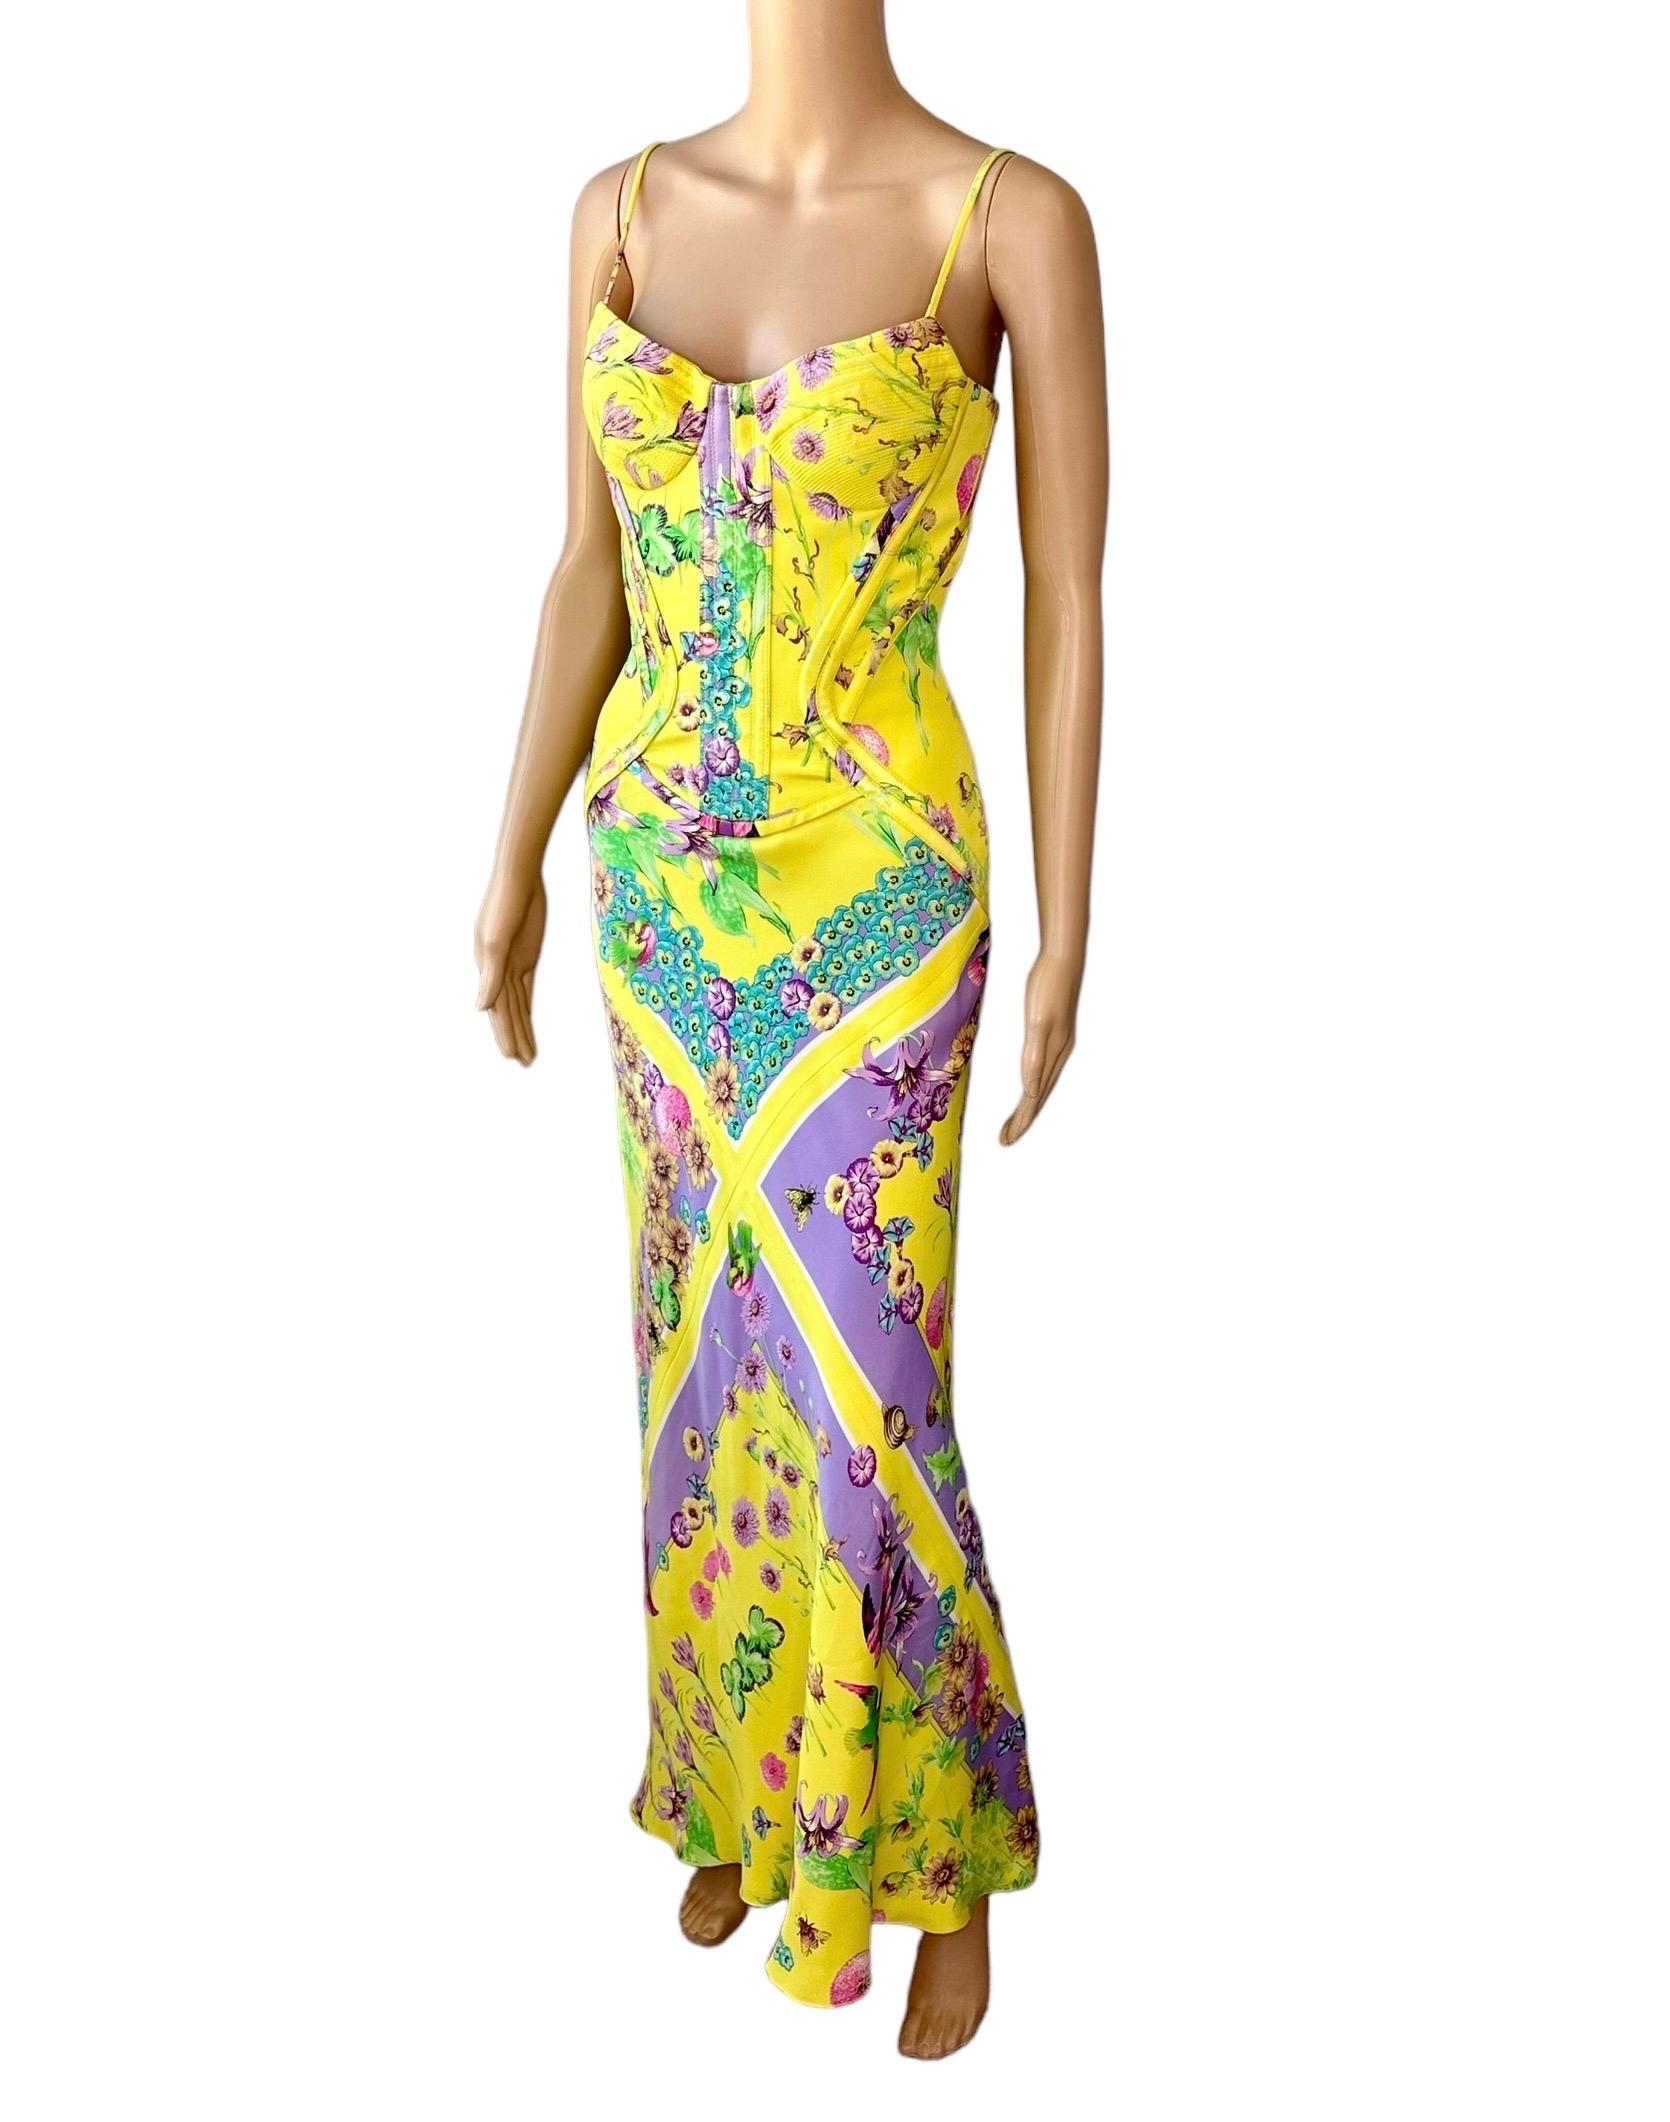 Versace S/S 2006 Bustier Corset Floral Print Evening Dress Gown For Sale 5